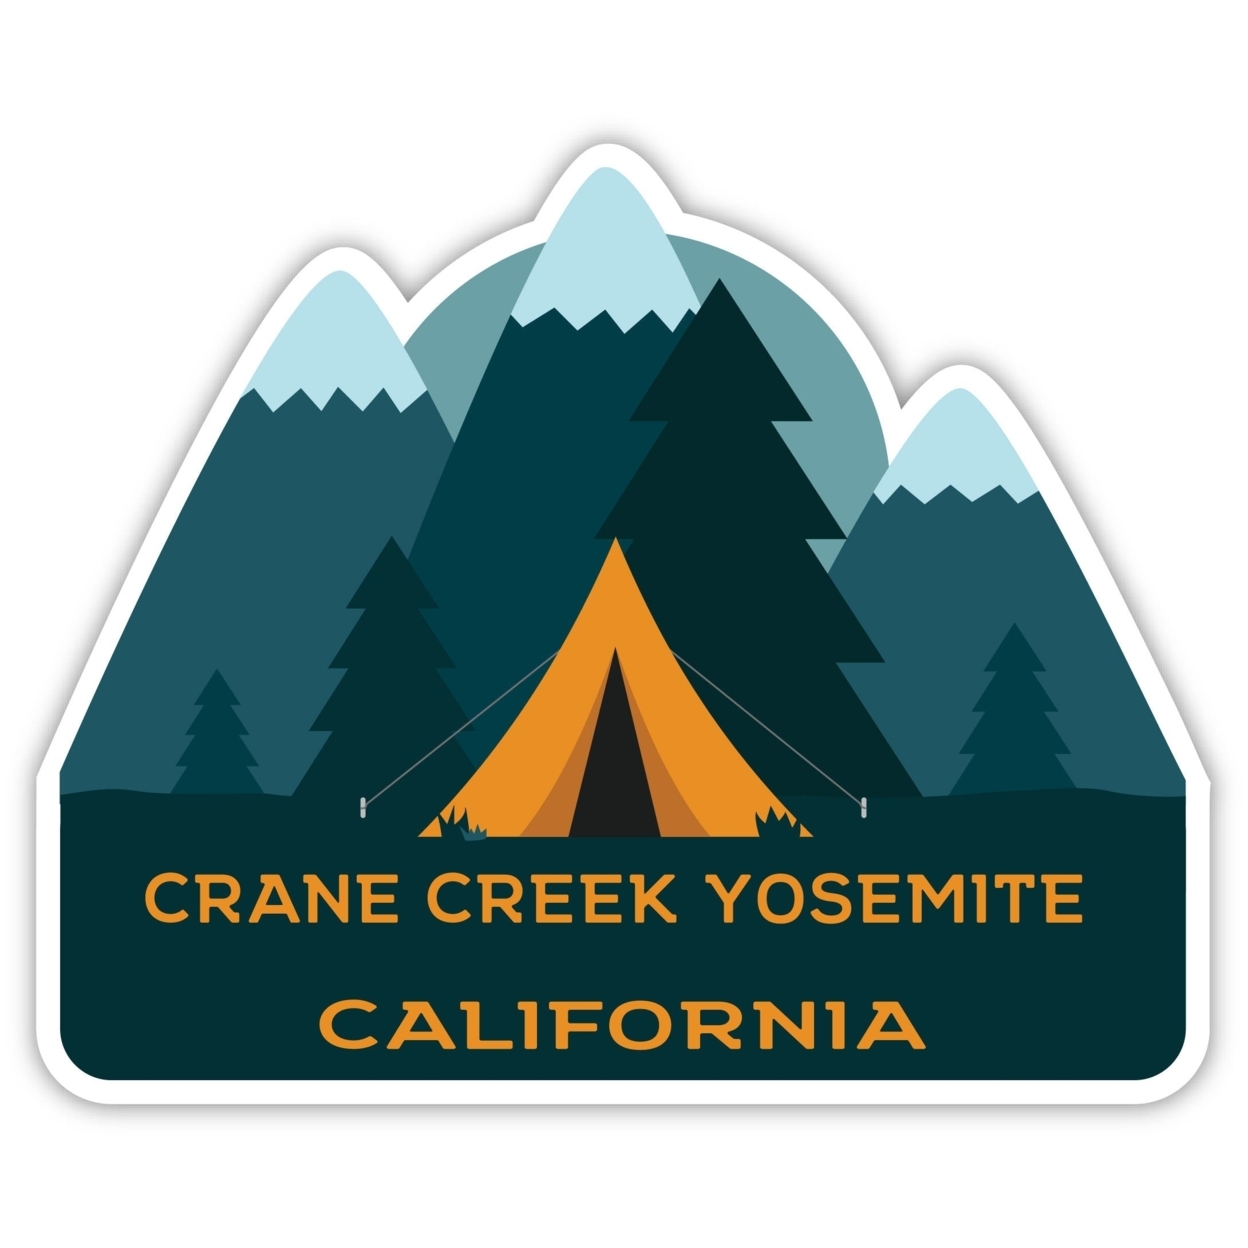 Crane Creek Yosemite California Souvenir Decorative Stickers (Choose Theme And Size) - Single Unit, 2-Inch, Tent